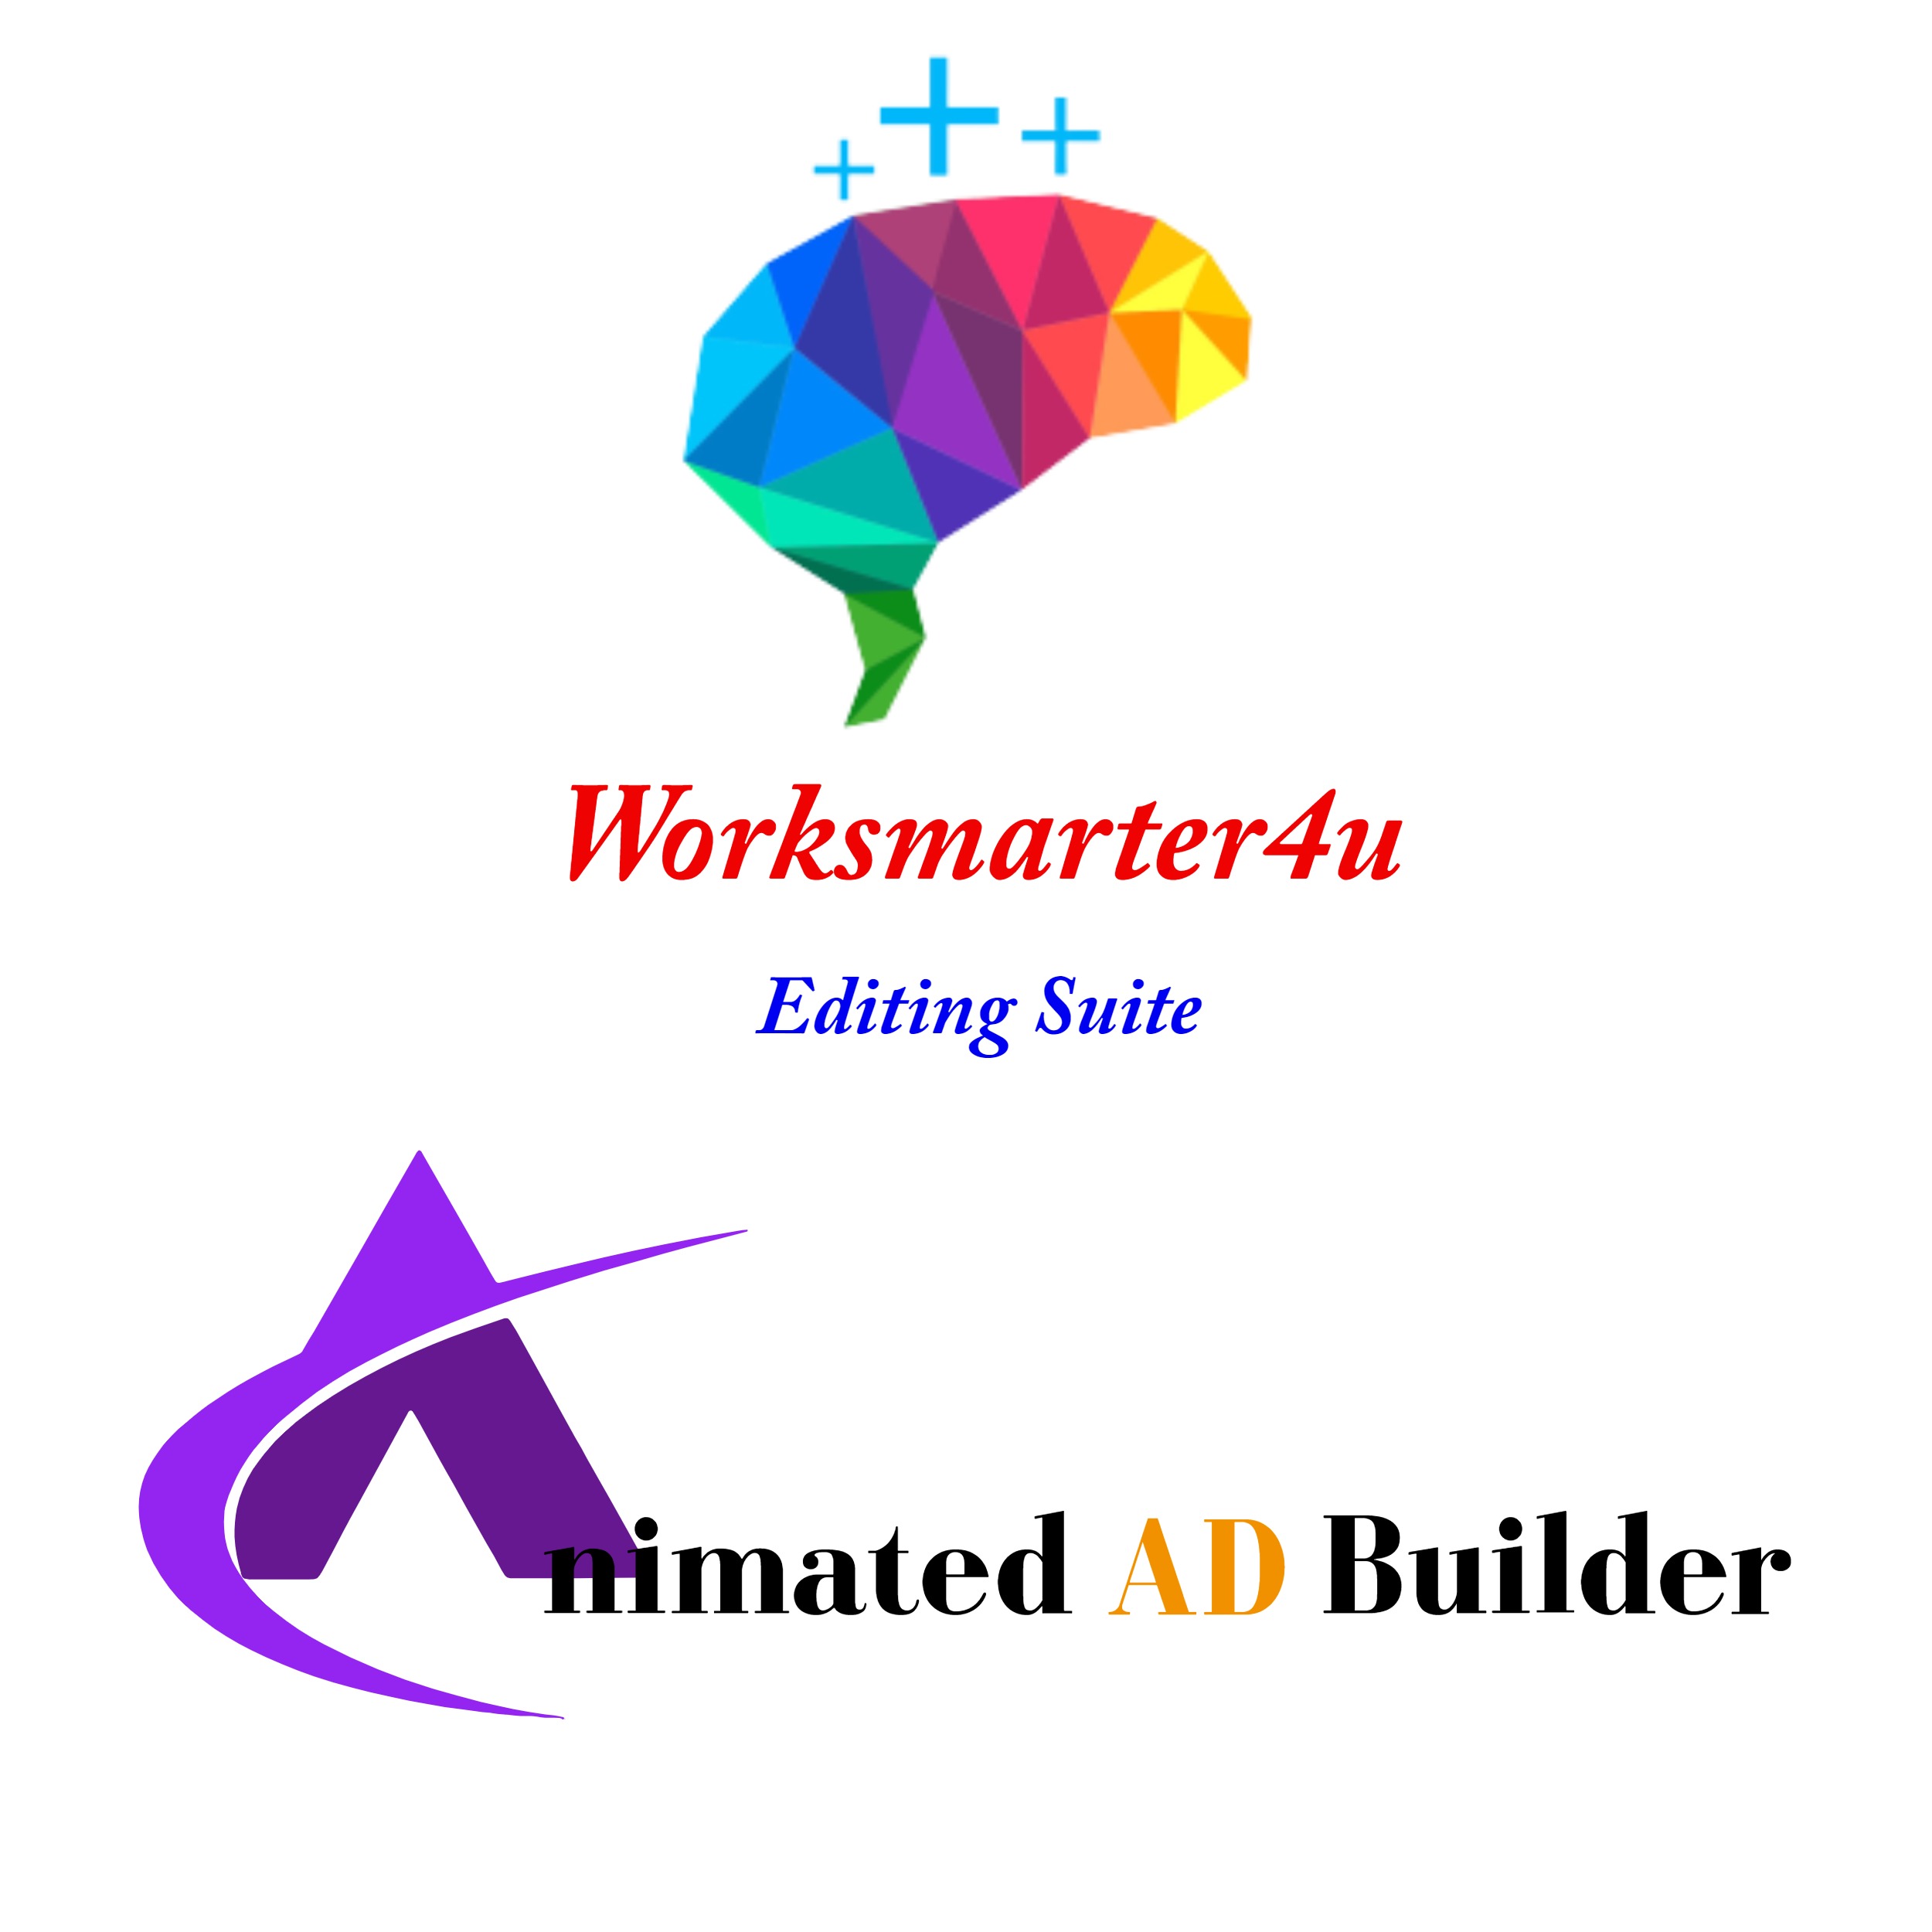 Animated Ad Builder Worksmarter4u Editing Suite